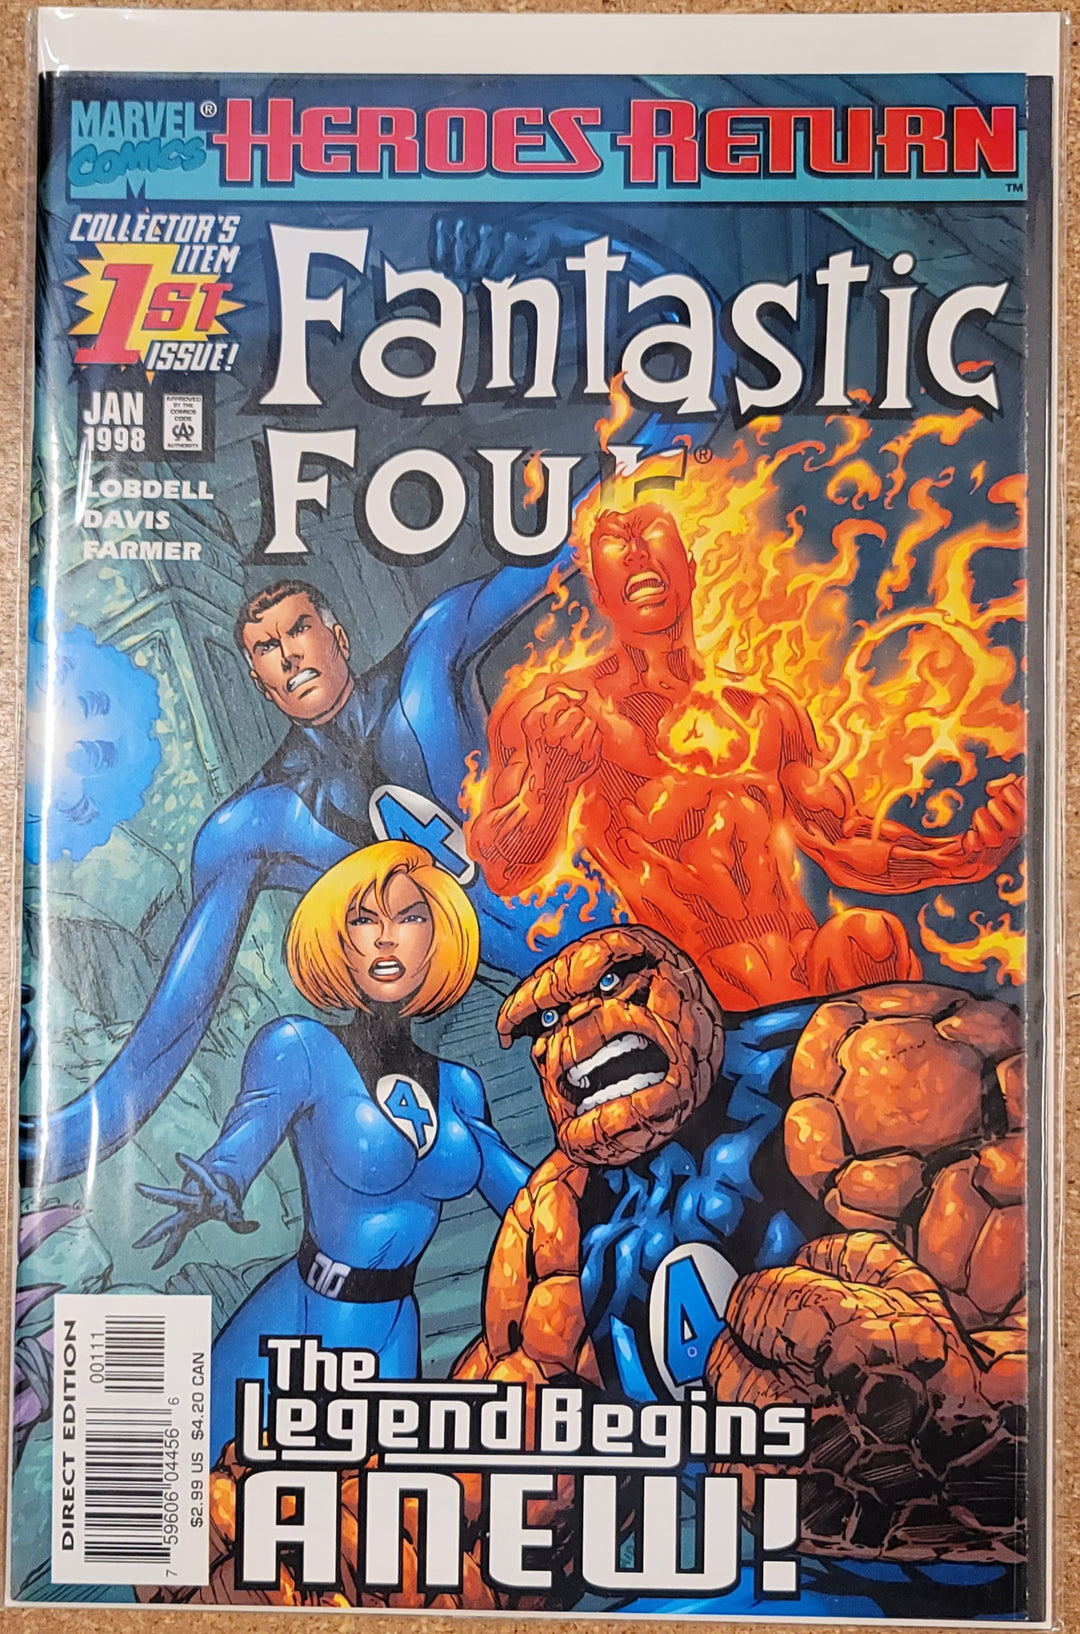 Fantastic Four: Heroes Return #1 issue Jan 1998 - Deal Changer